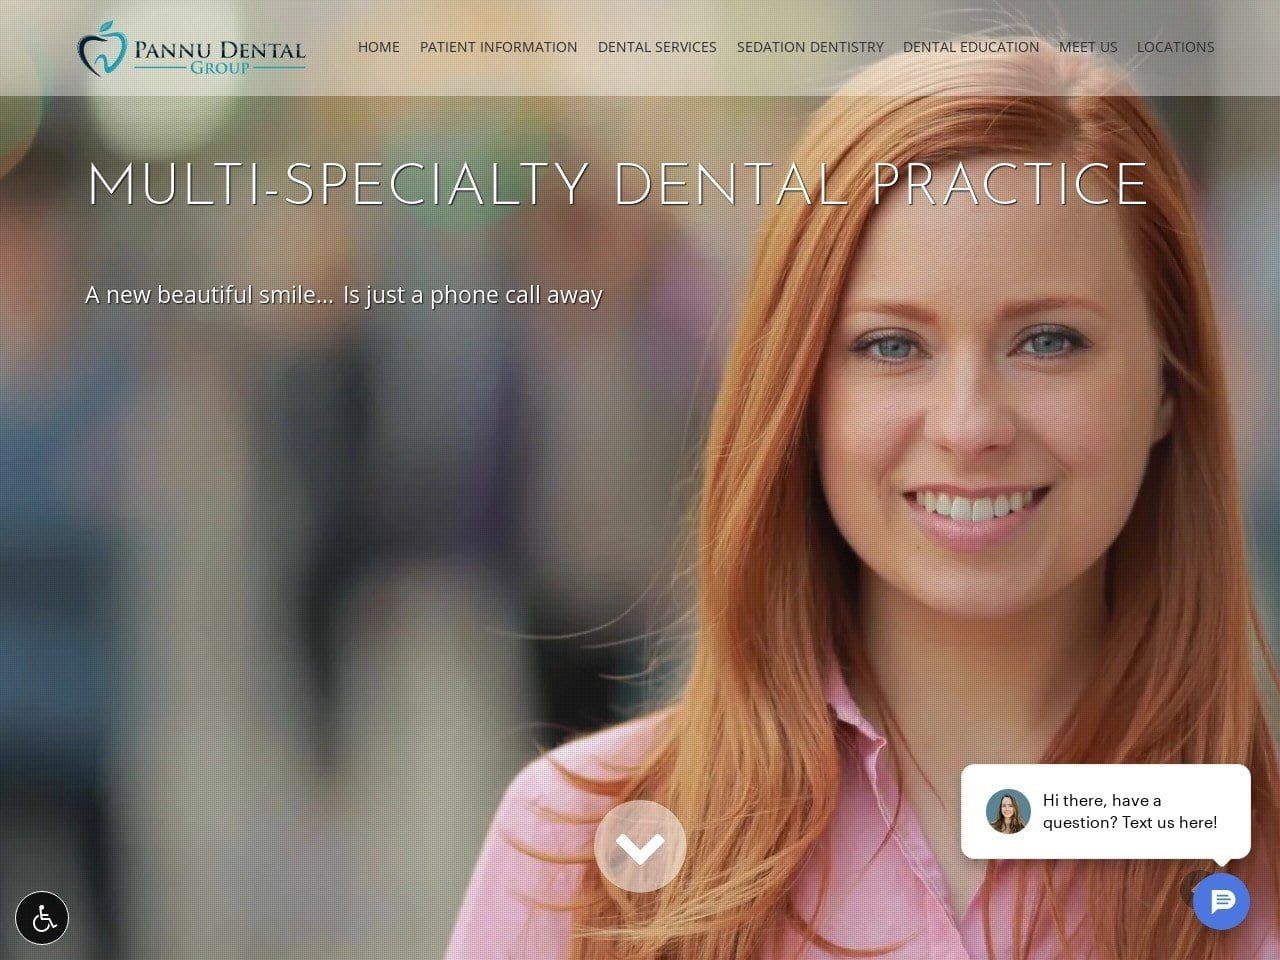 Pannu Dental Care Website Screenshot from pannudental.com